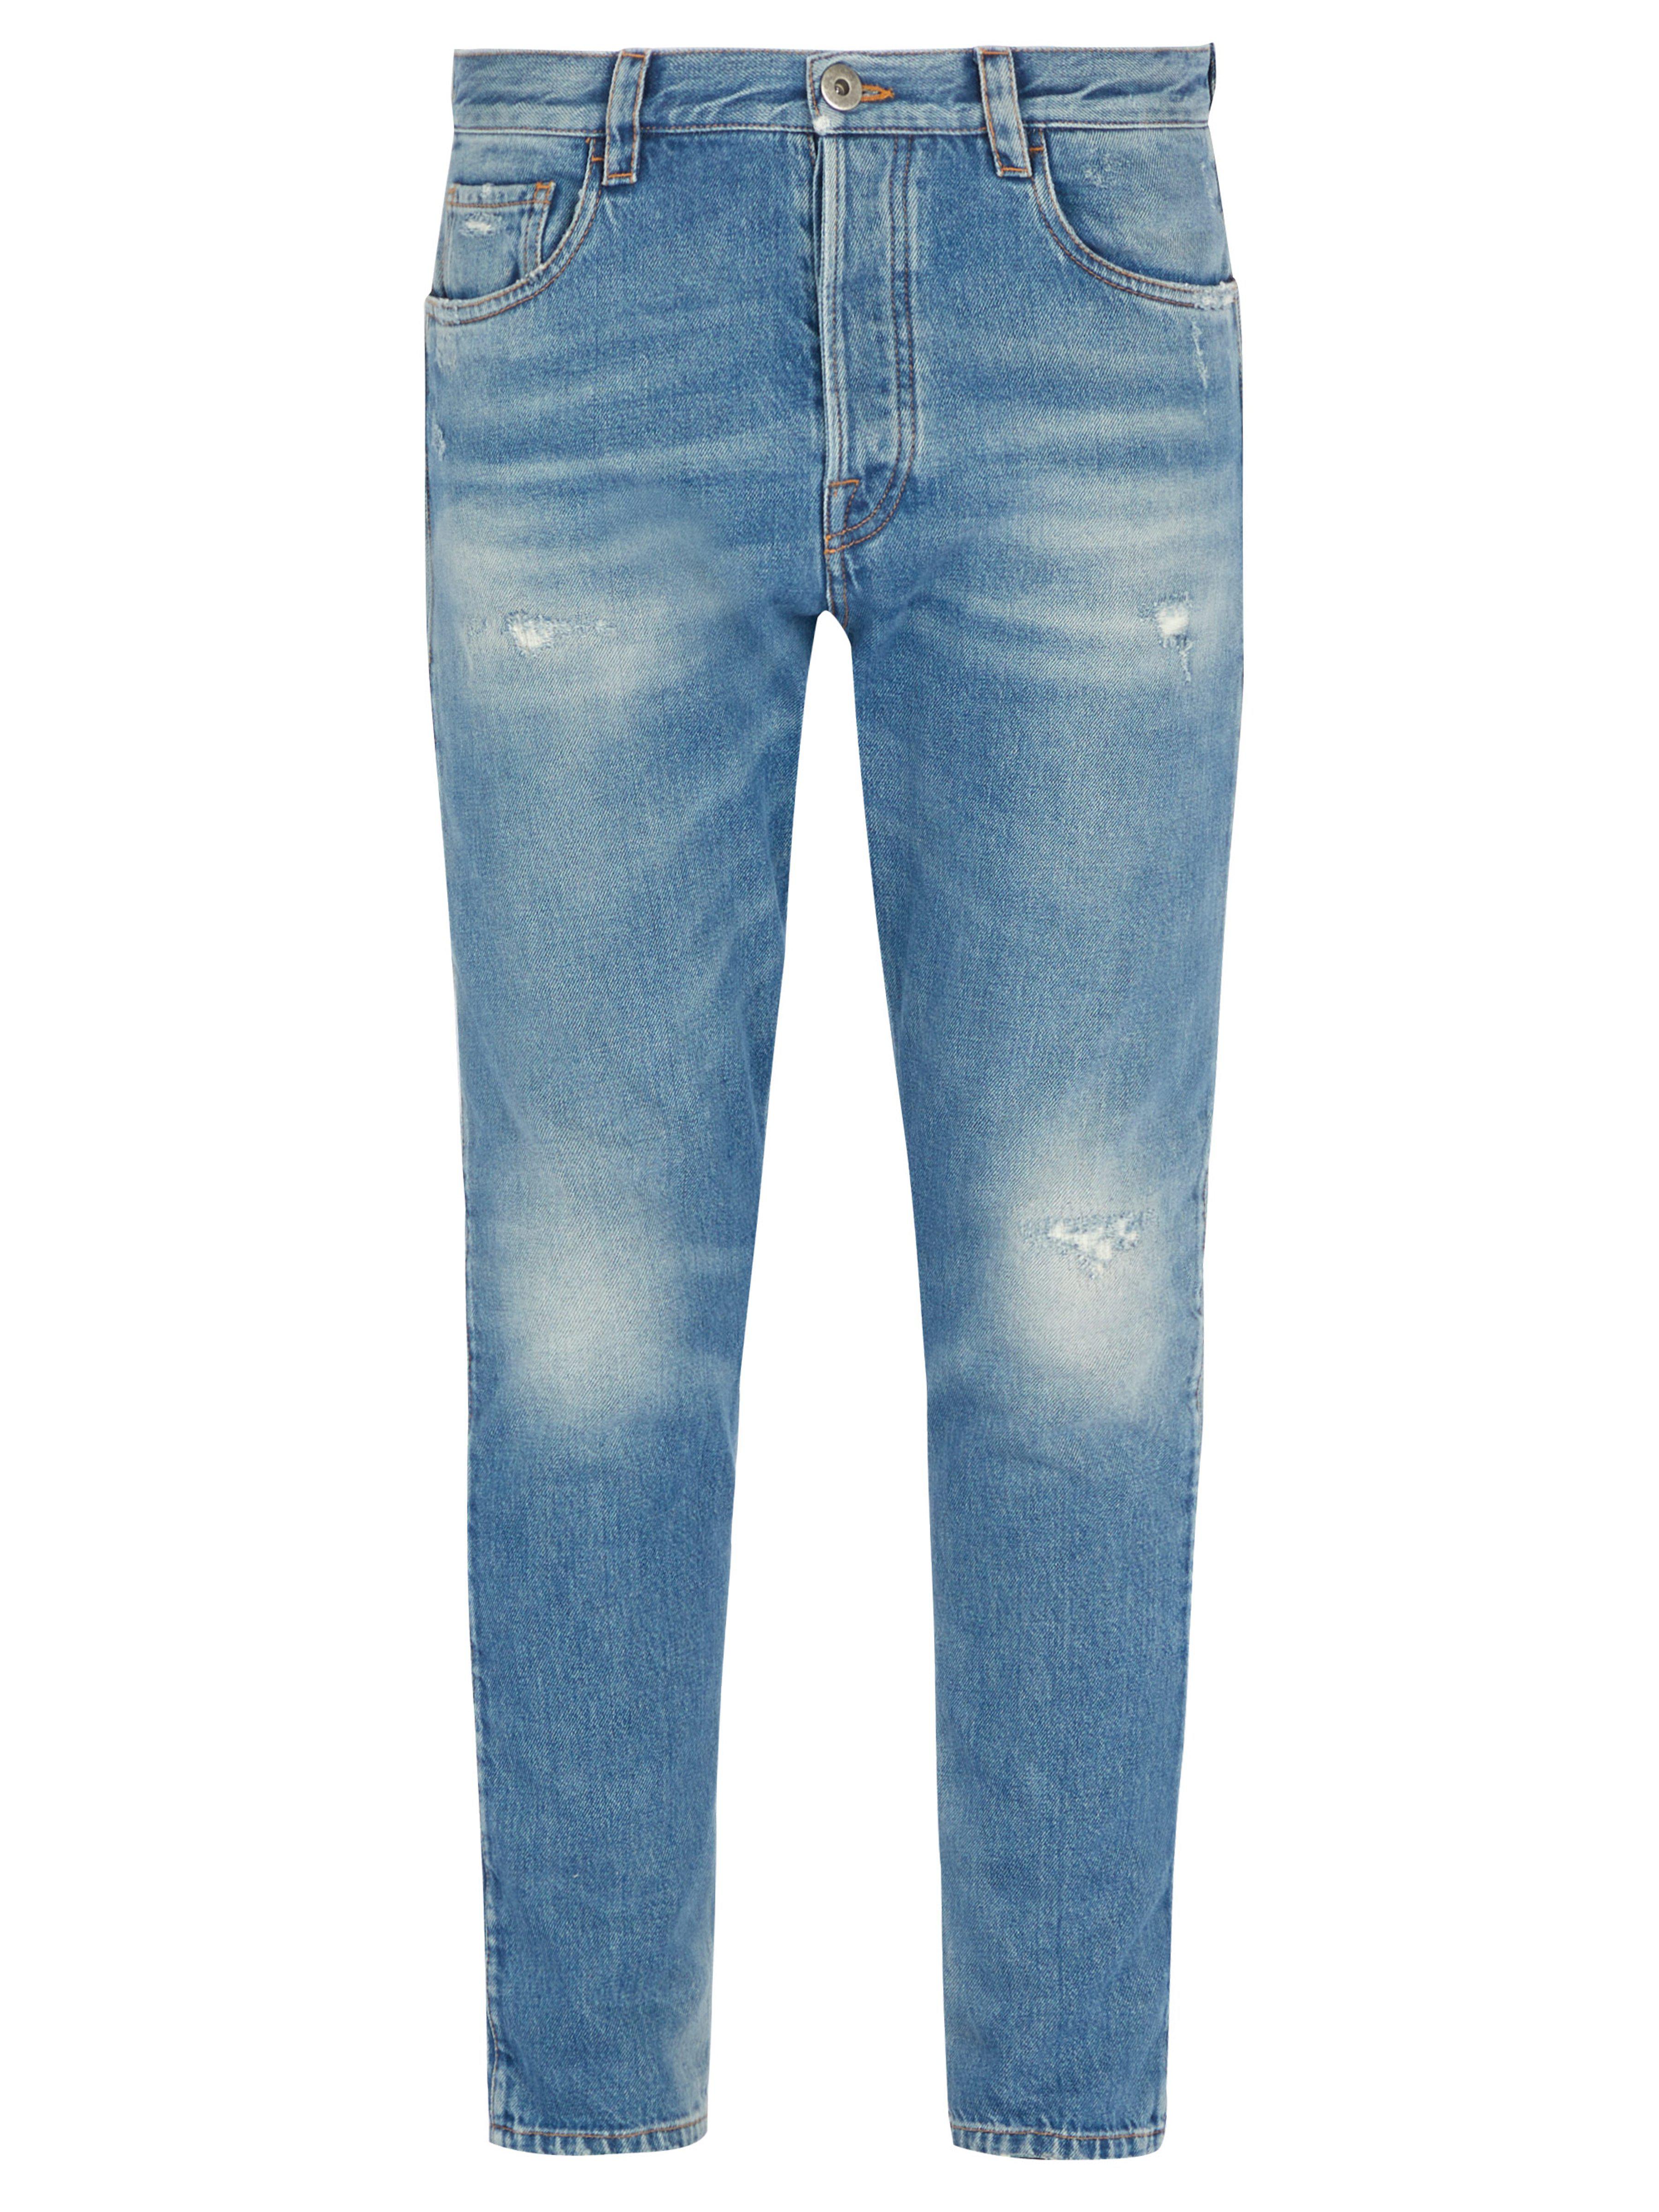 Prada Denim Straight Leg Distressed Jeans in Denim (Blue) for Men - Lyst